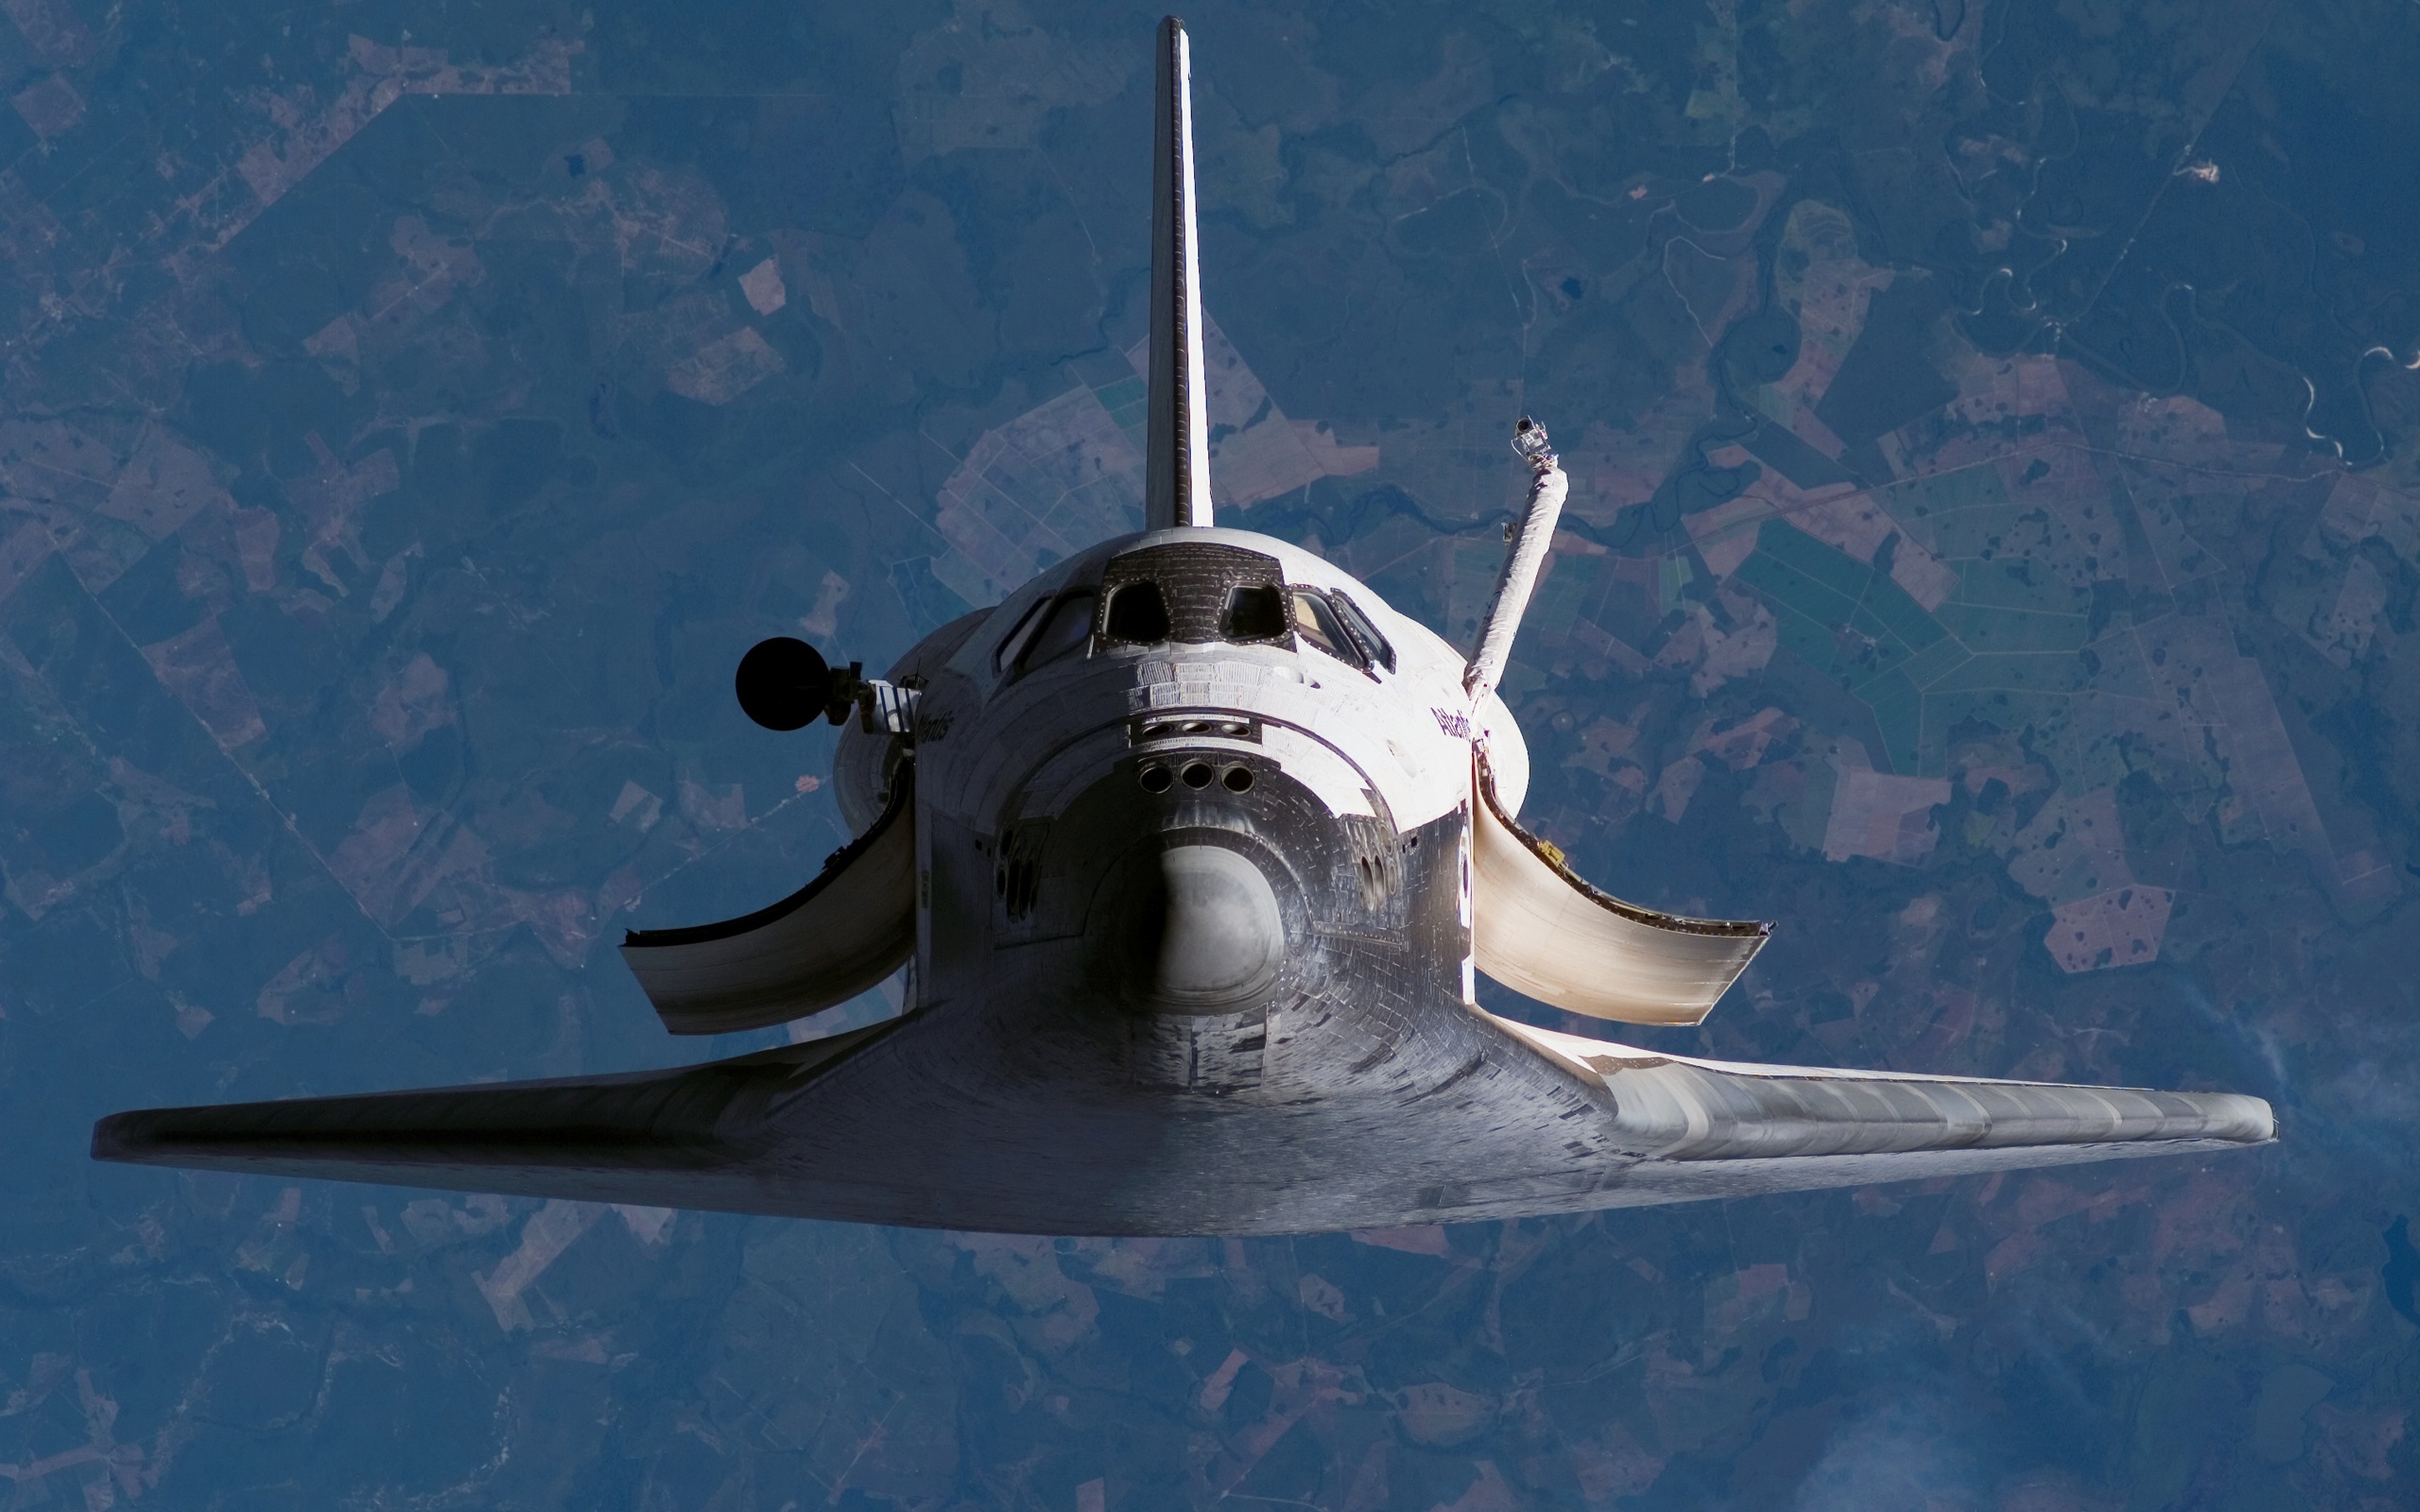 space shuttles, vehicles, space shuttle atlantis